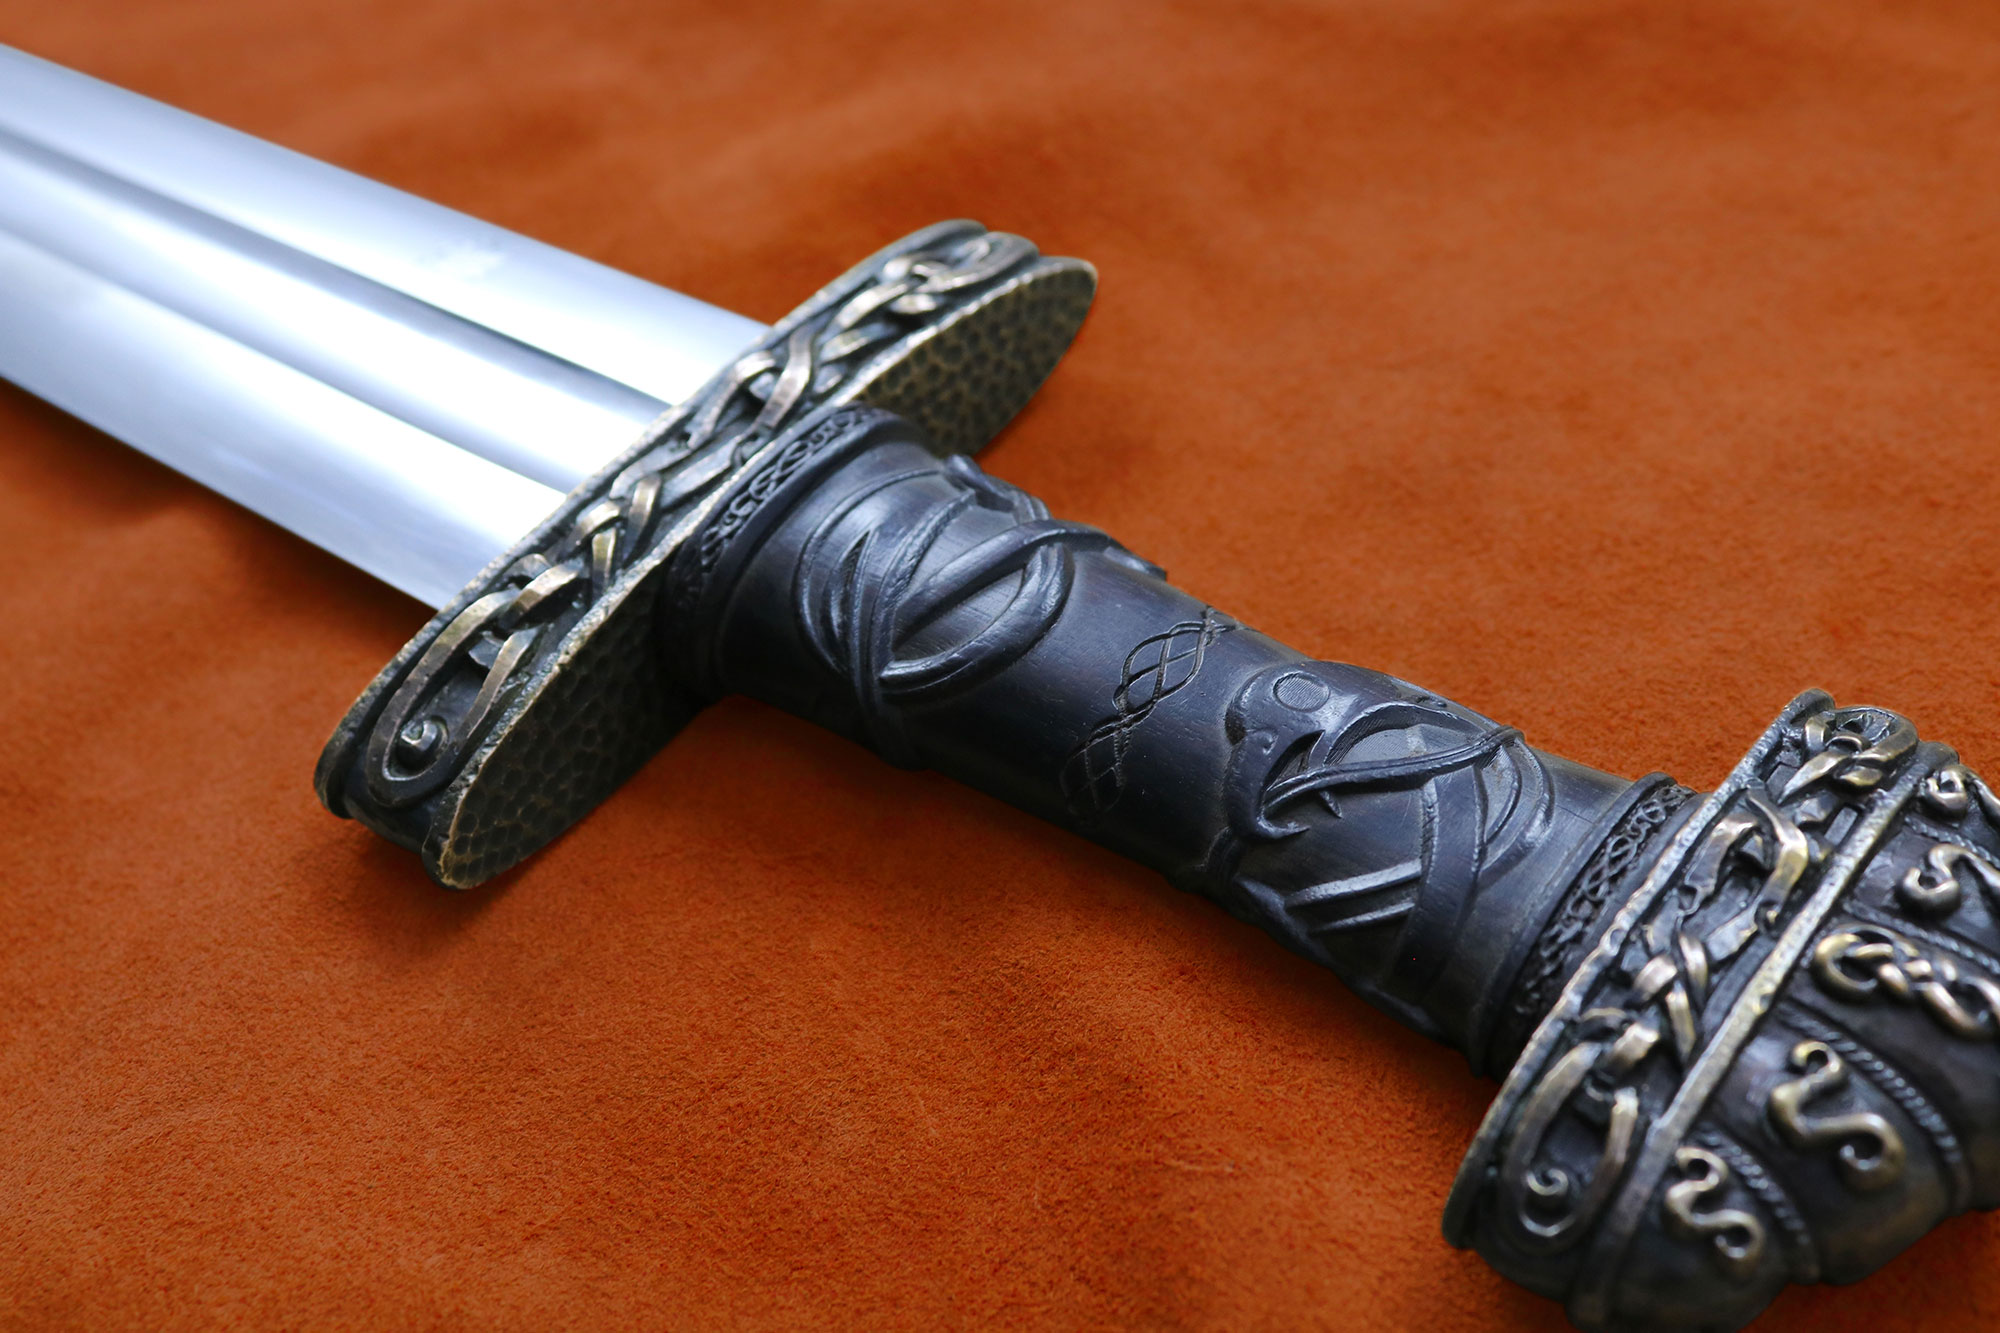 The Oslo Viking Sword